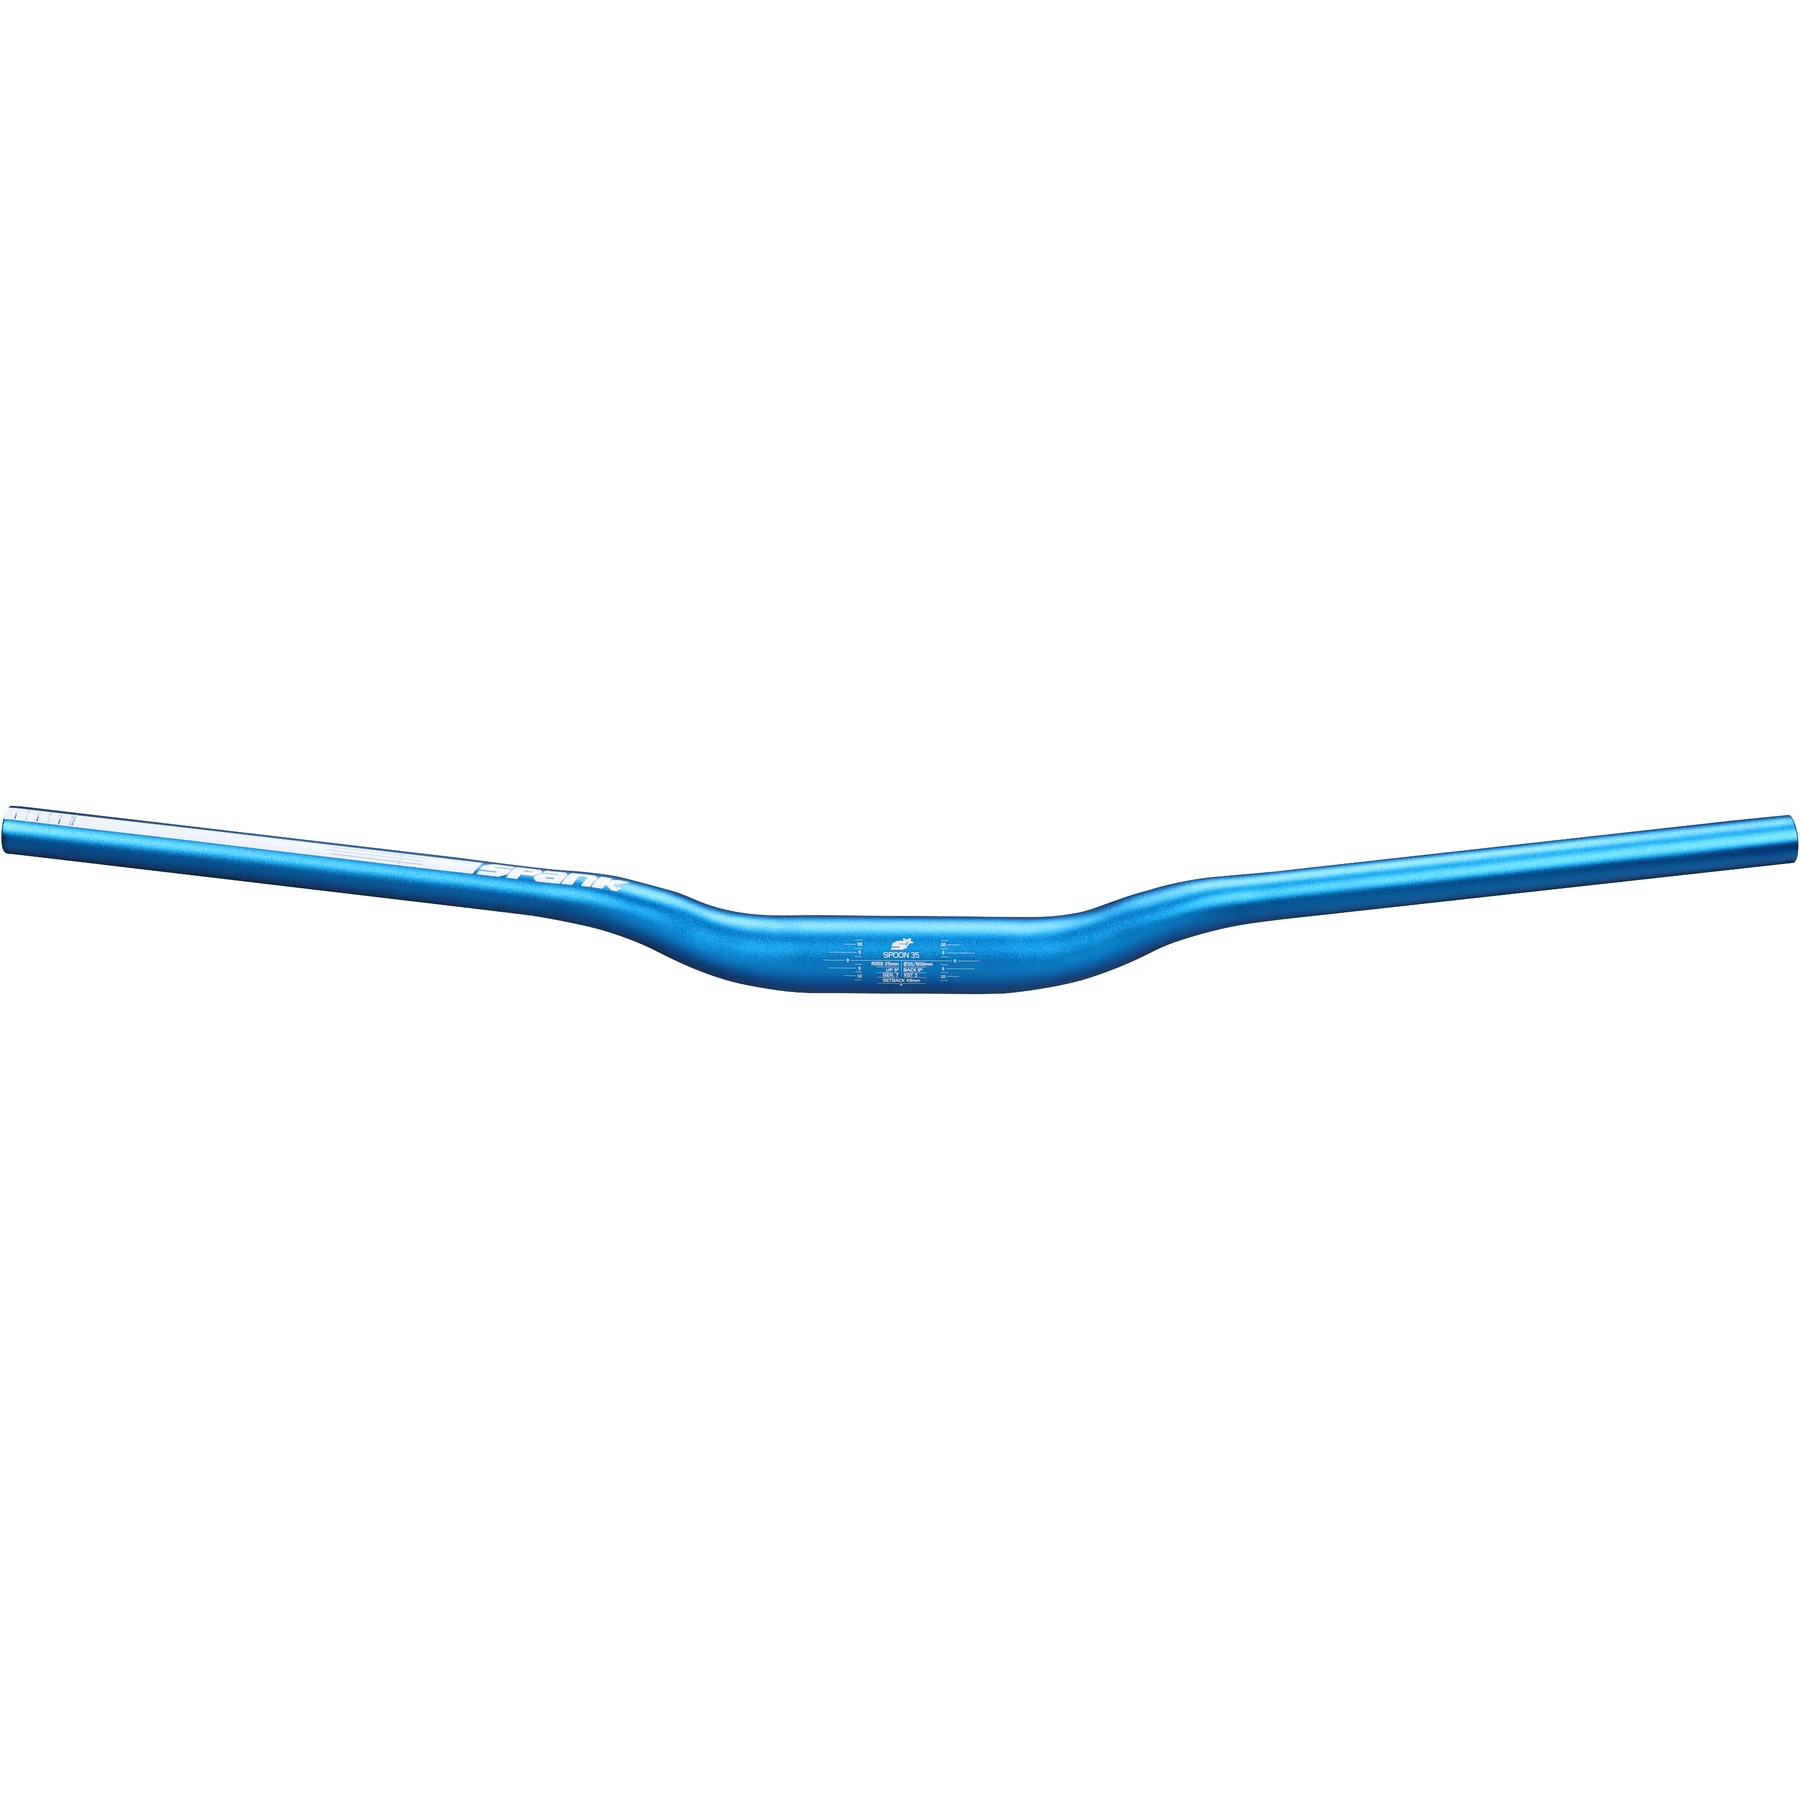 Produktbild von Spank Spoon 35 MTB Lenker - 800mm - blau